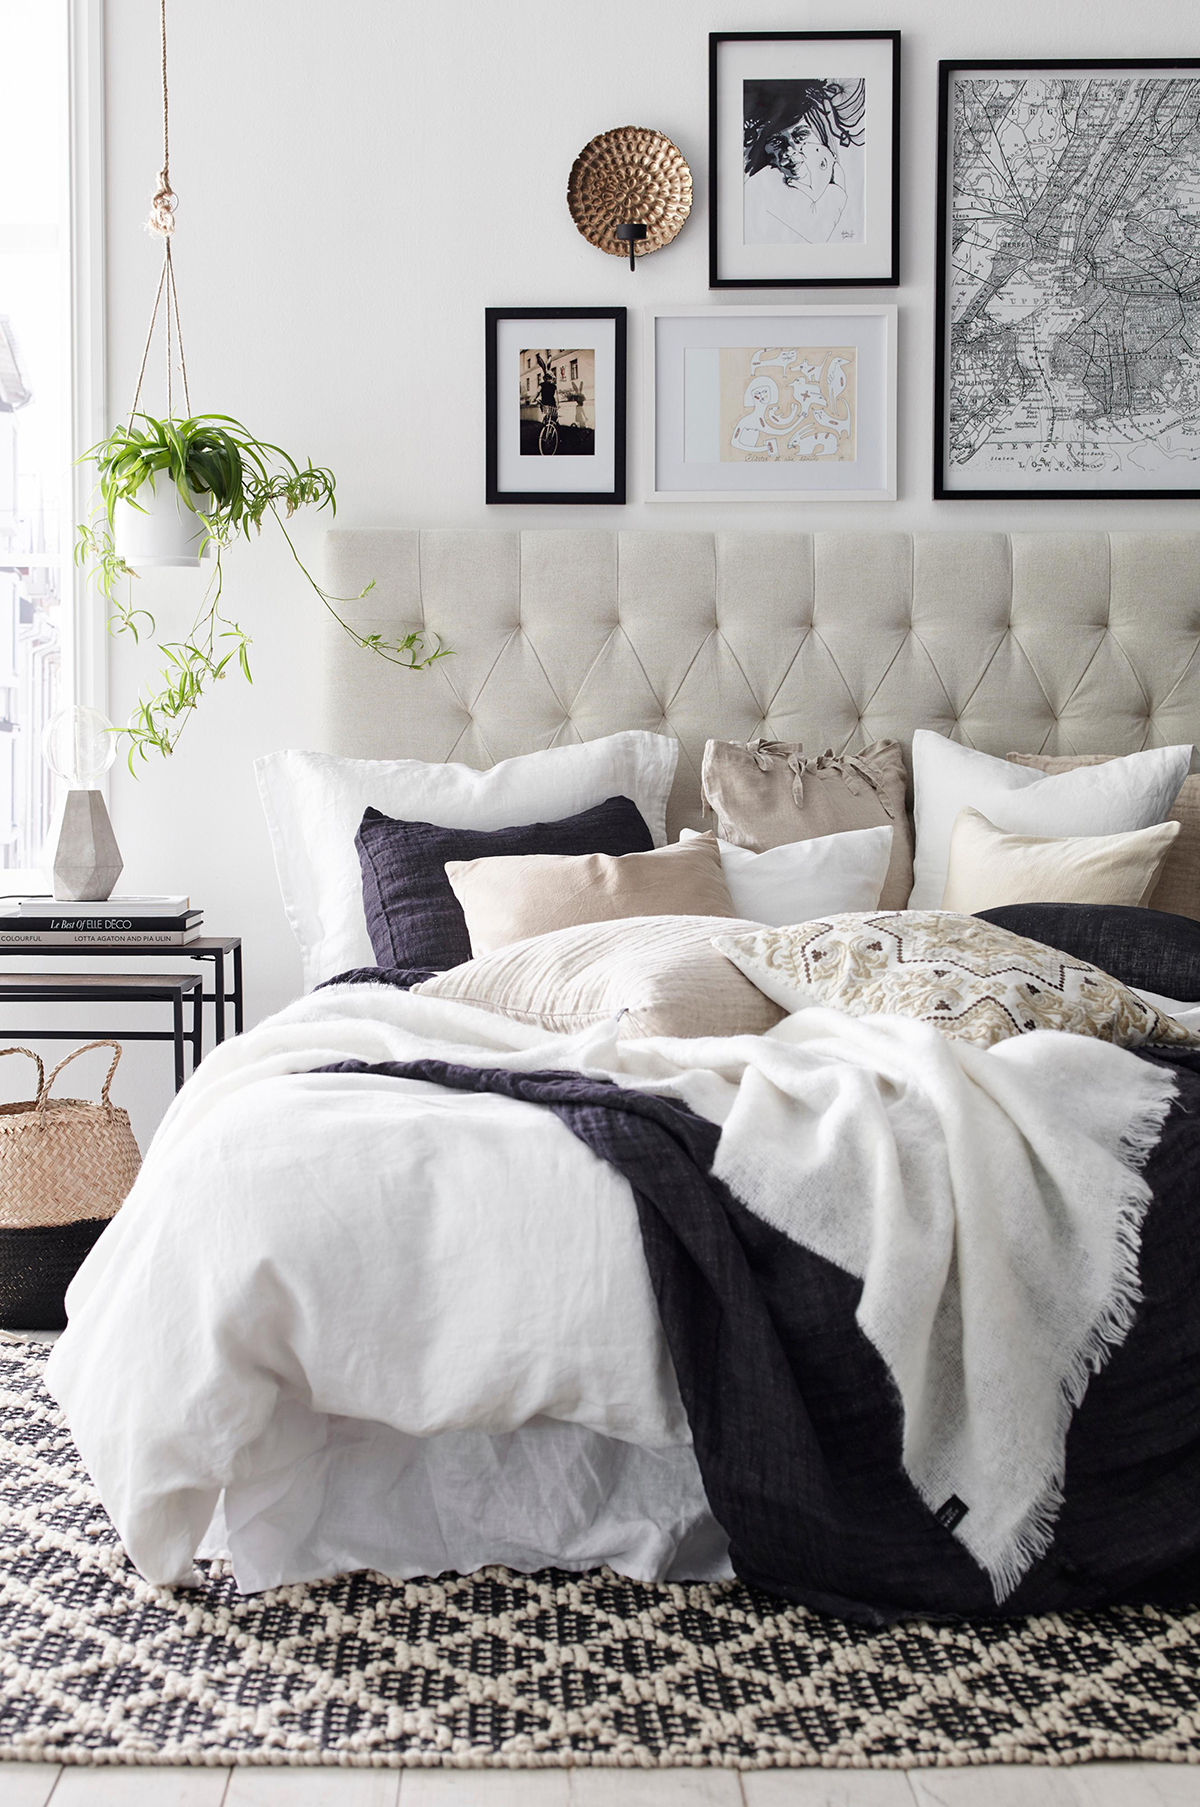 White & Black Bedroom Ideas